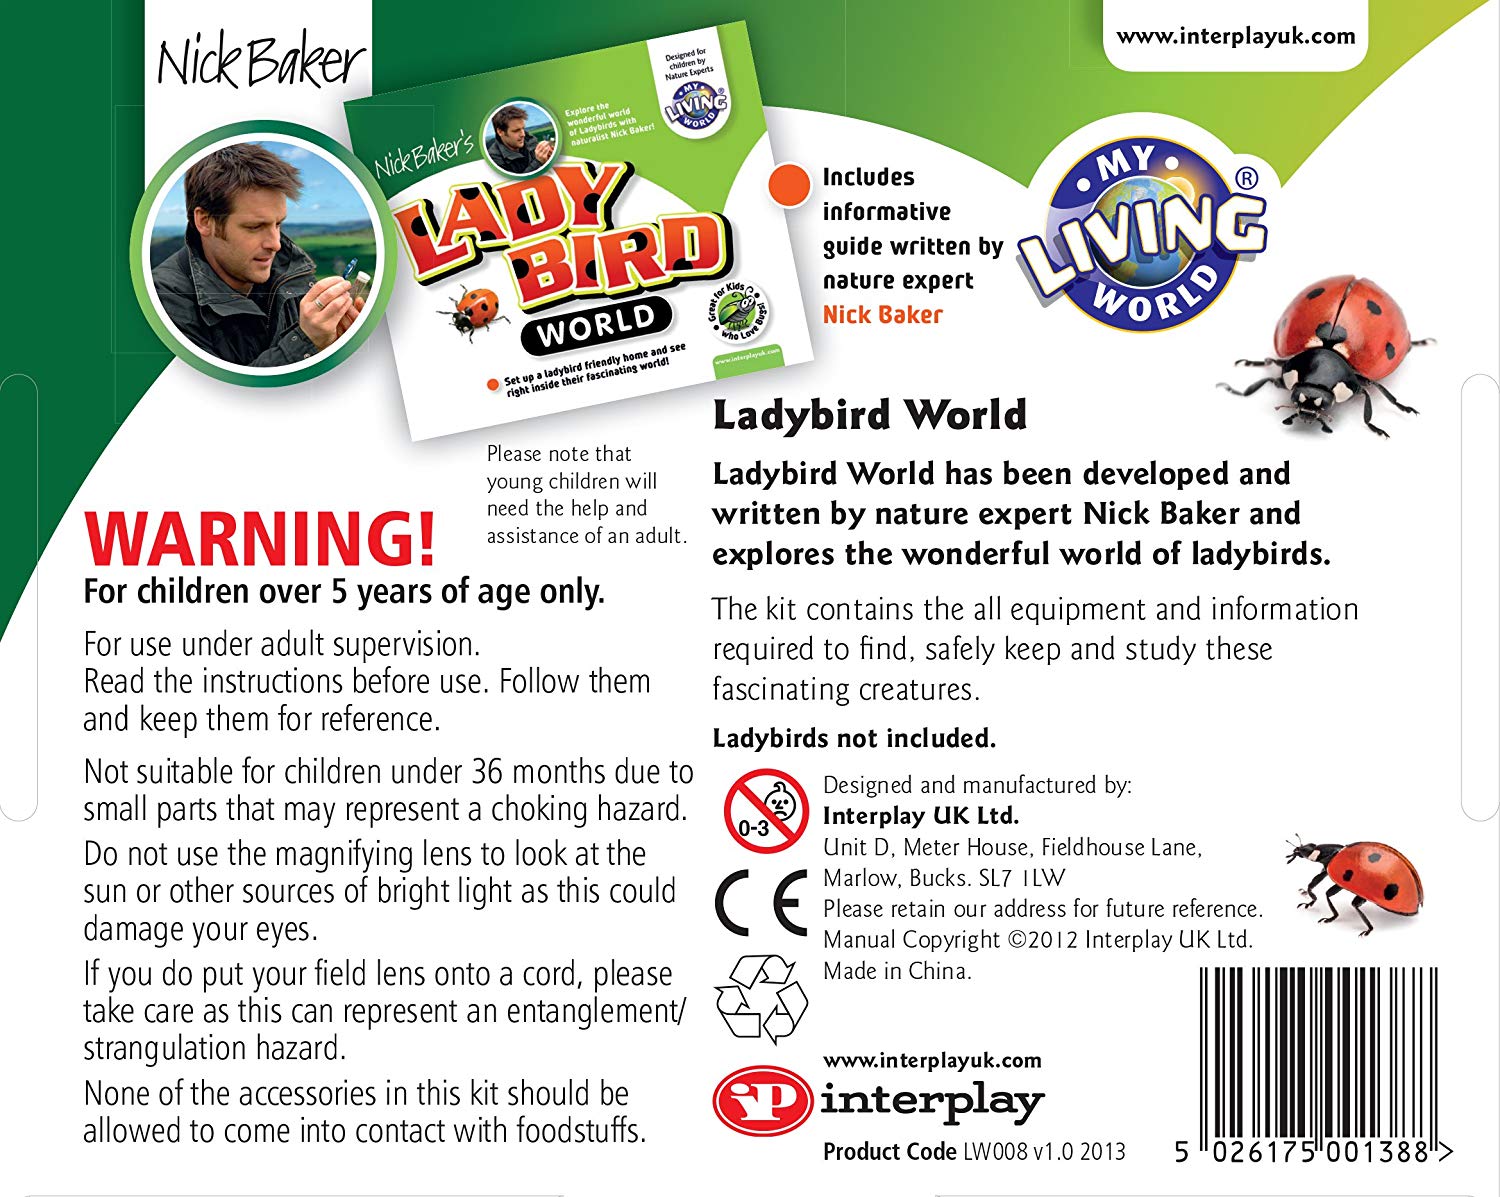 Mixed My Living World LW008 Interplay Ladybird World 